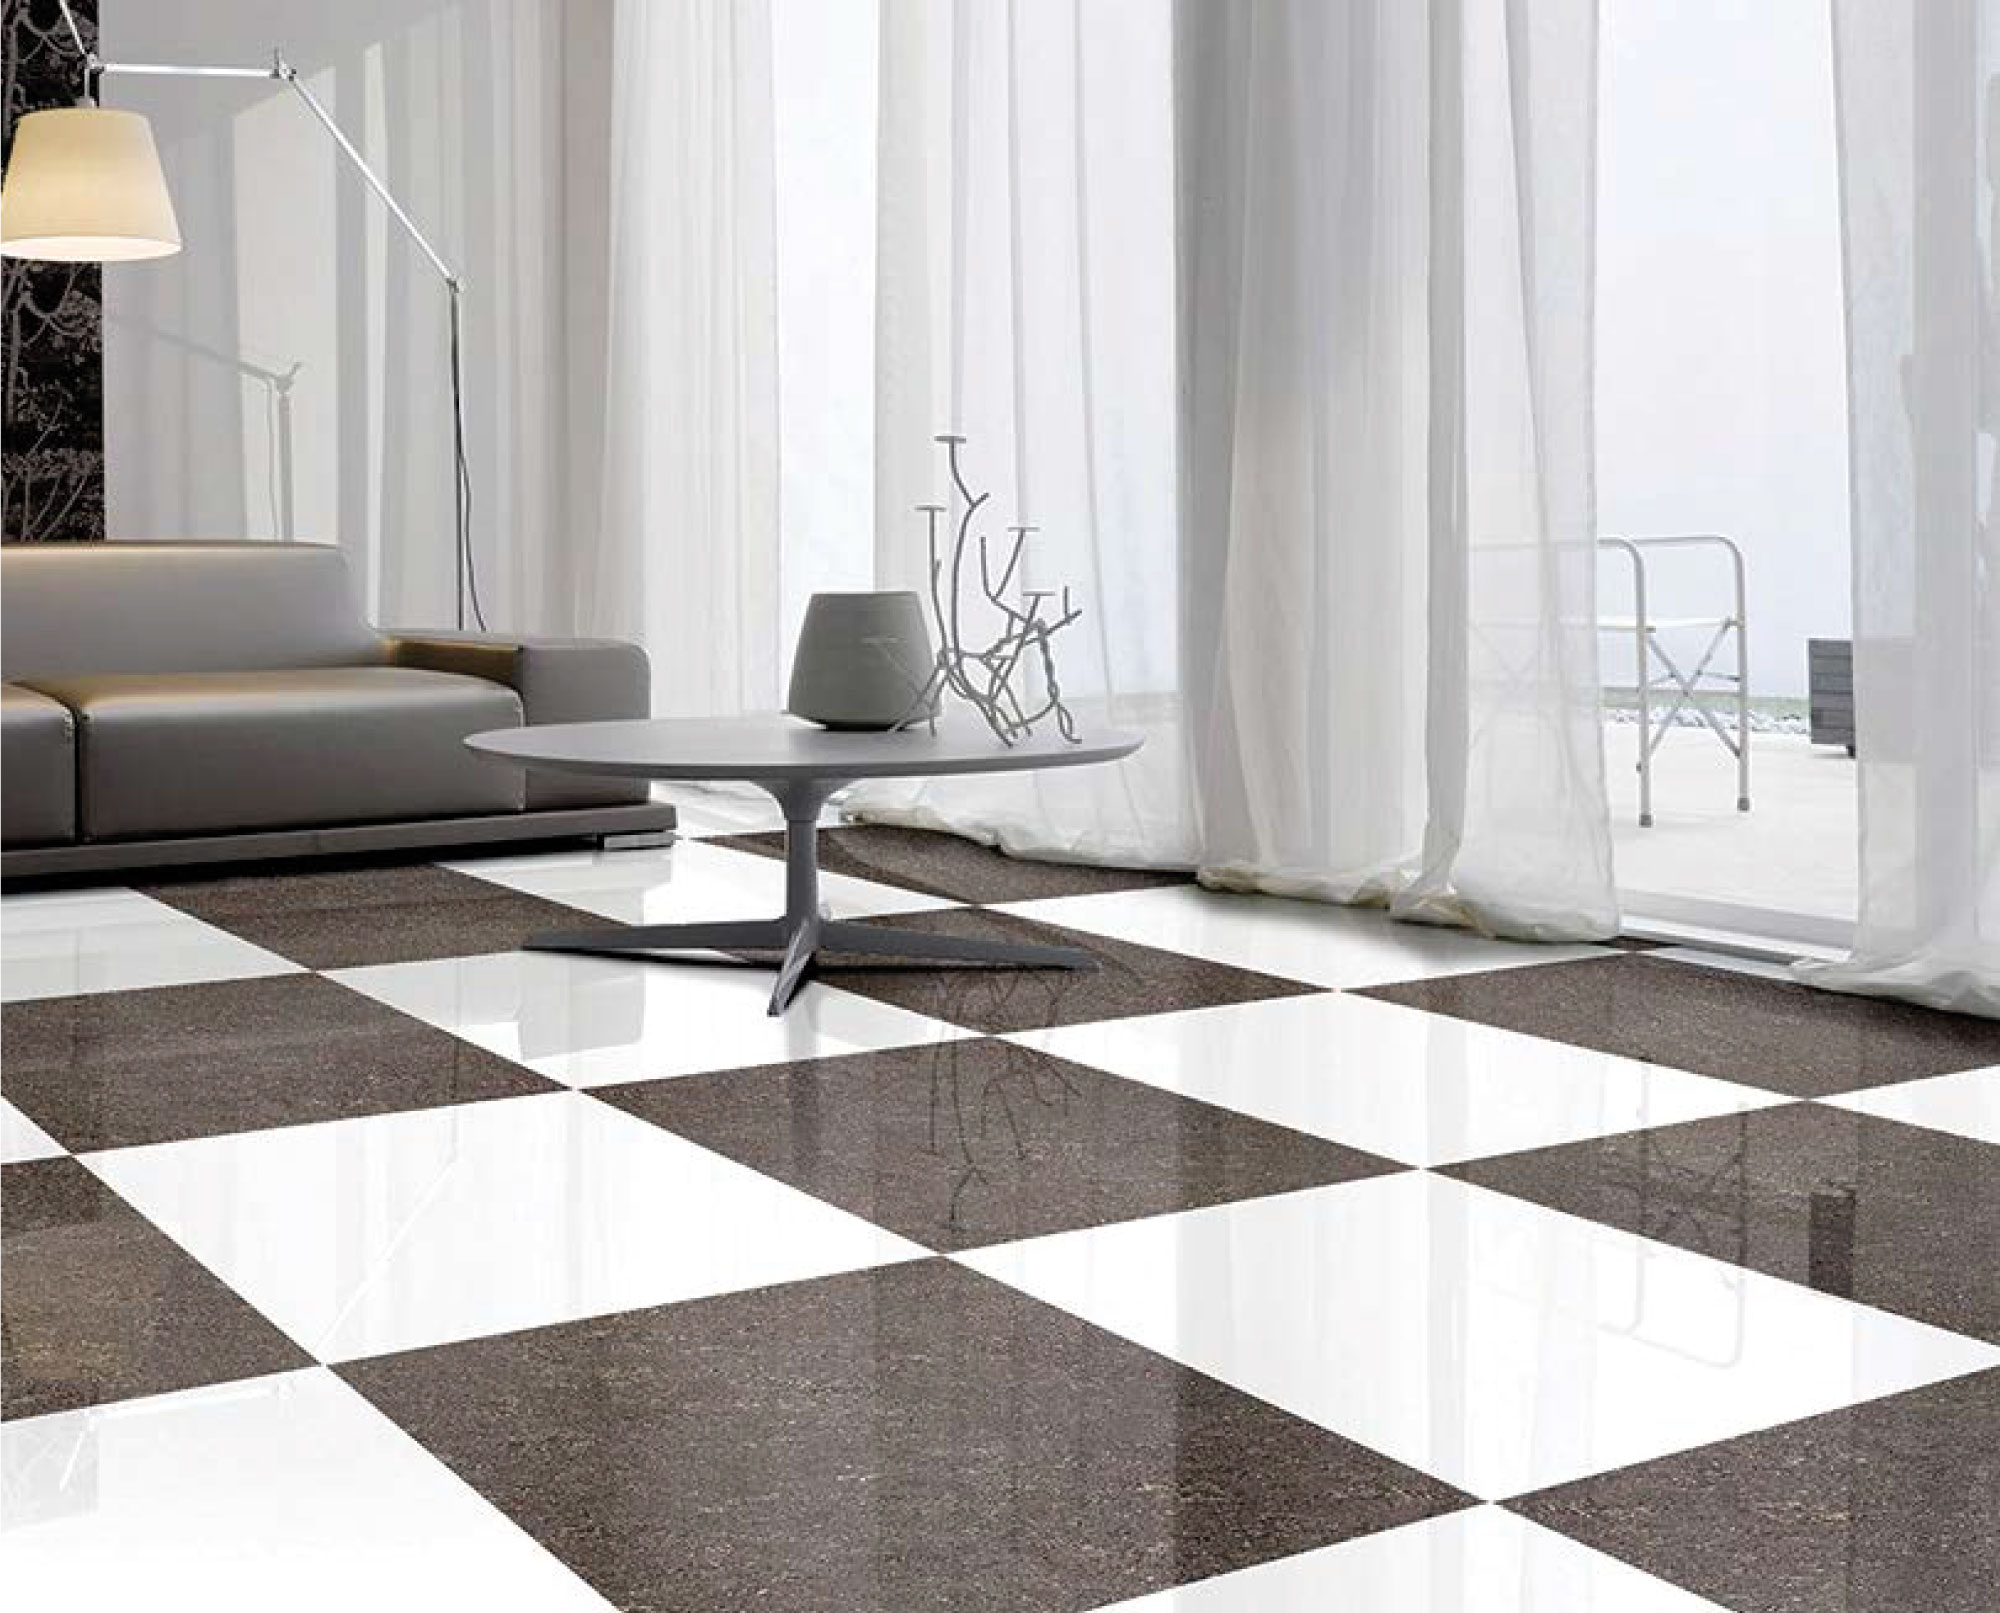 Tile flooring dubai